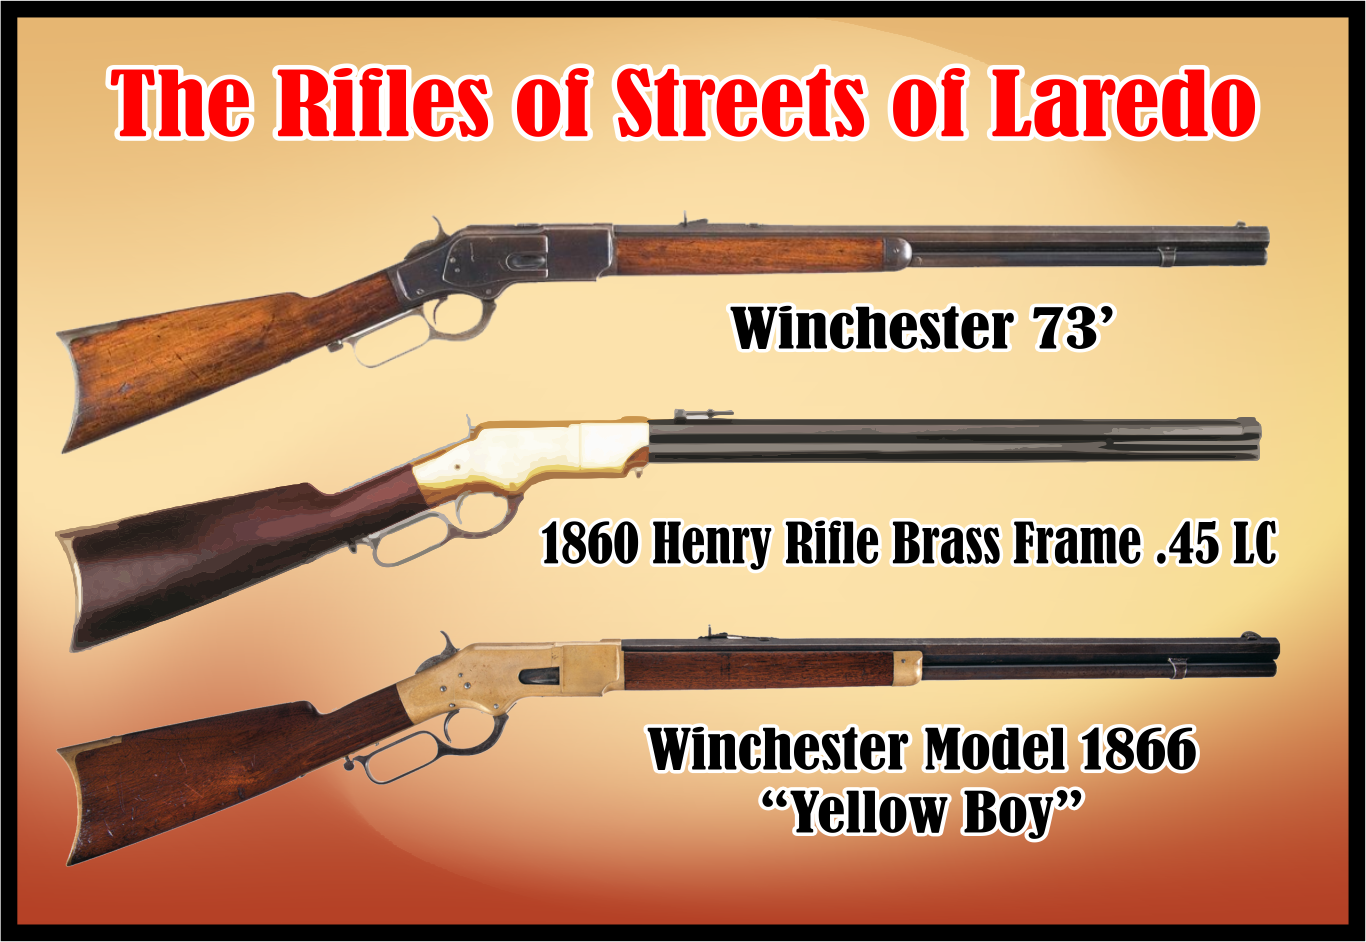 Streets of Laredo Rifles